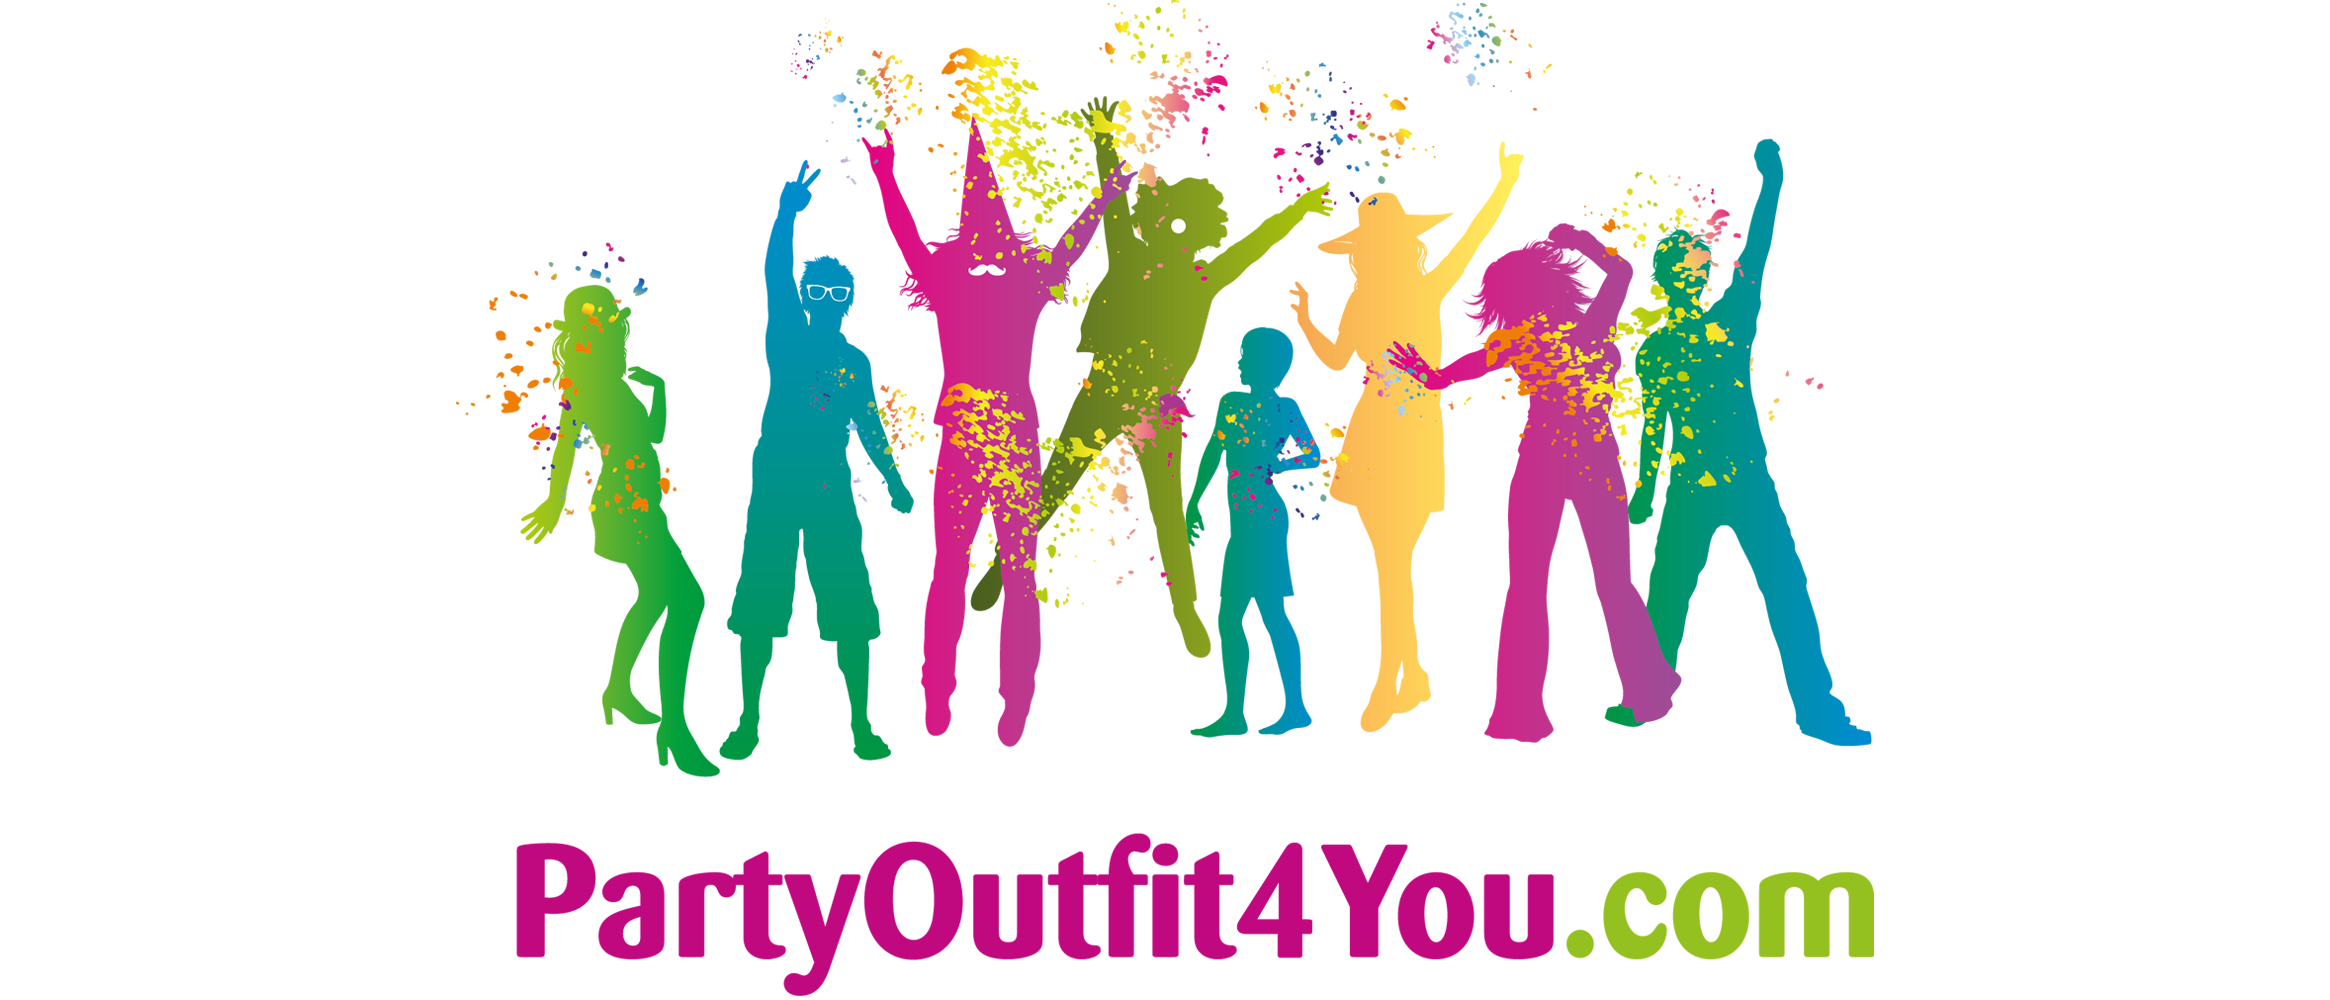 Partyoutfit4you.com